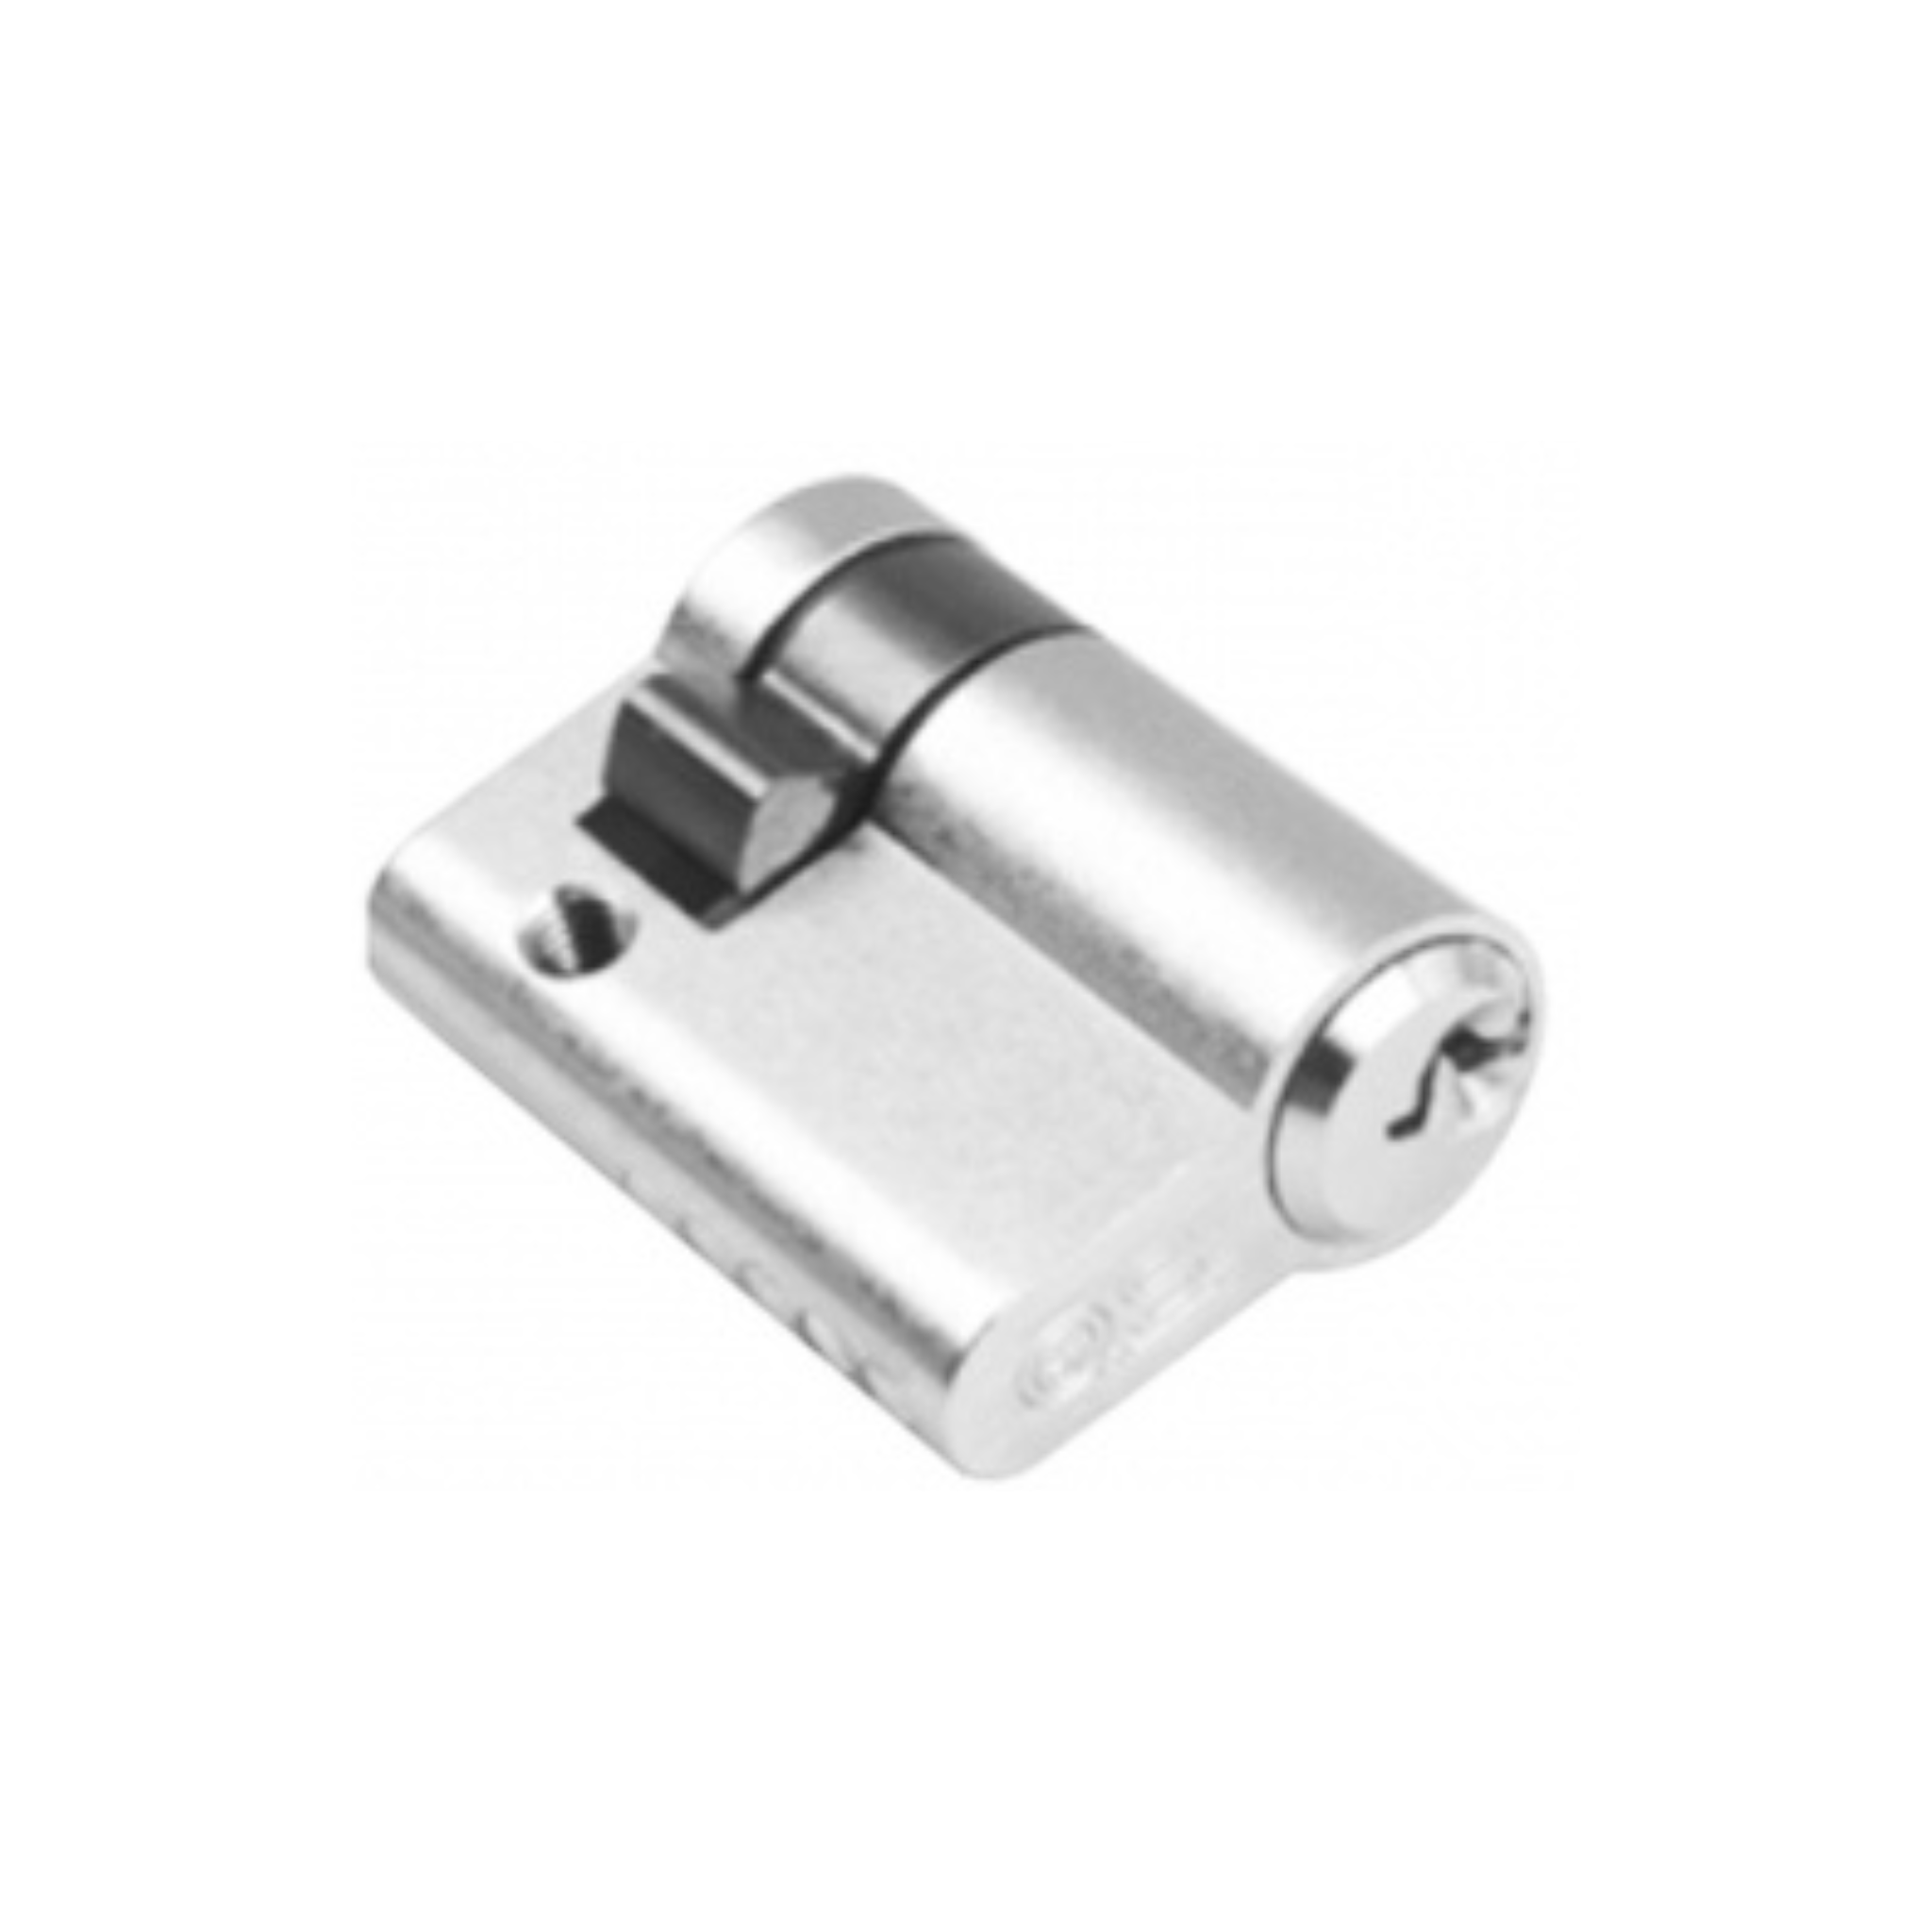 QS1102/AN, 40mm - 30/10, Half (Single Cylinder), Key, Keyed to Differ (Standard), 3 Keys, 5 Pin, Antique Nickel, QS